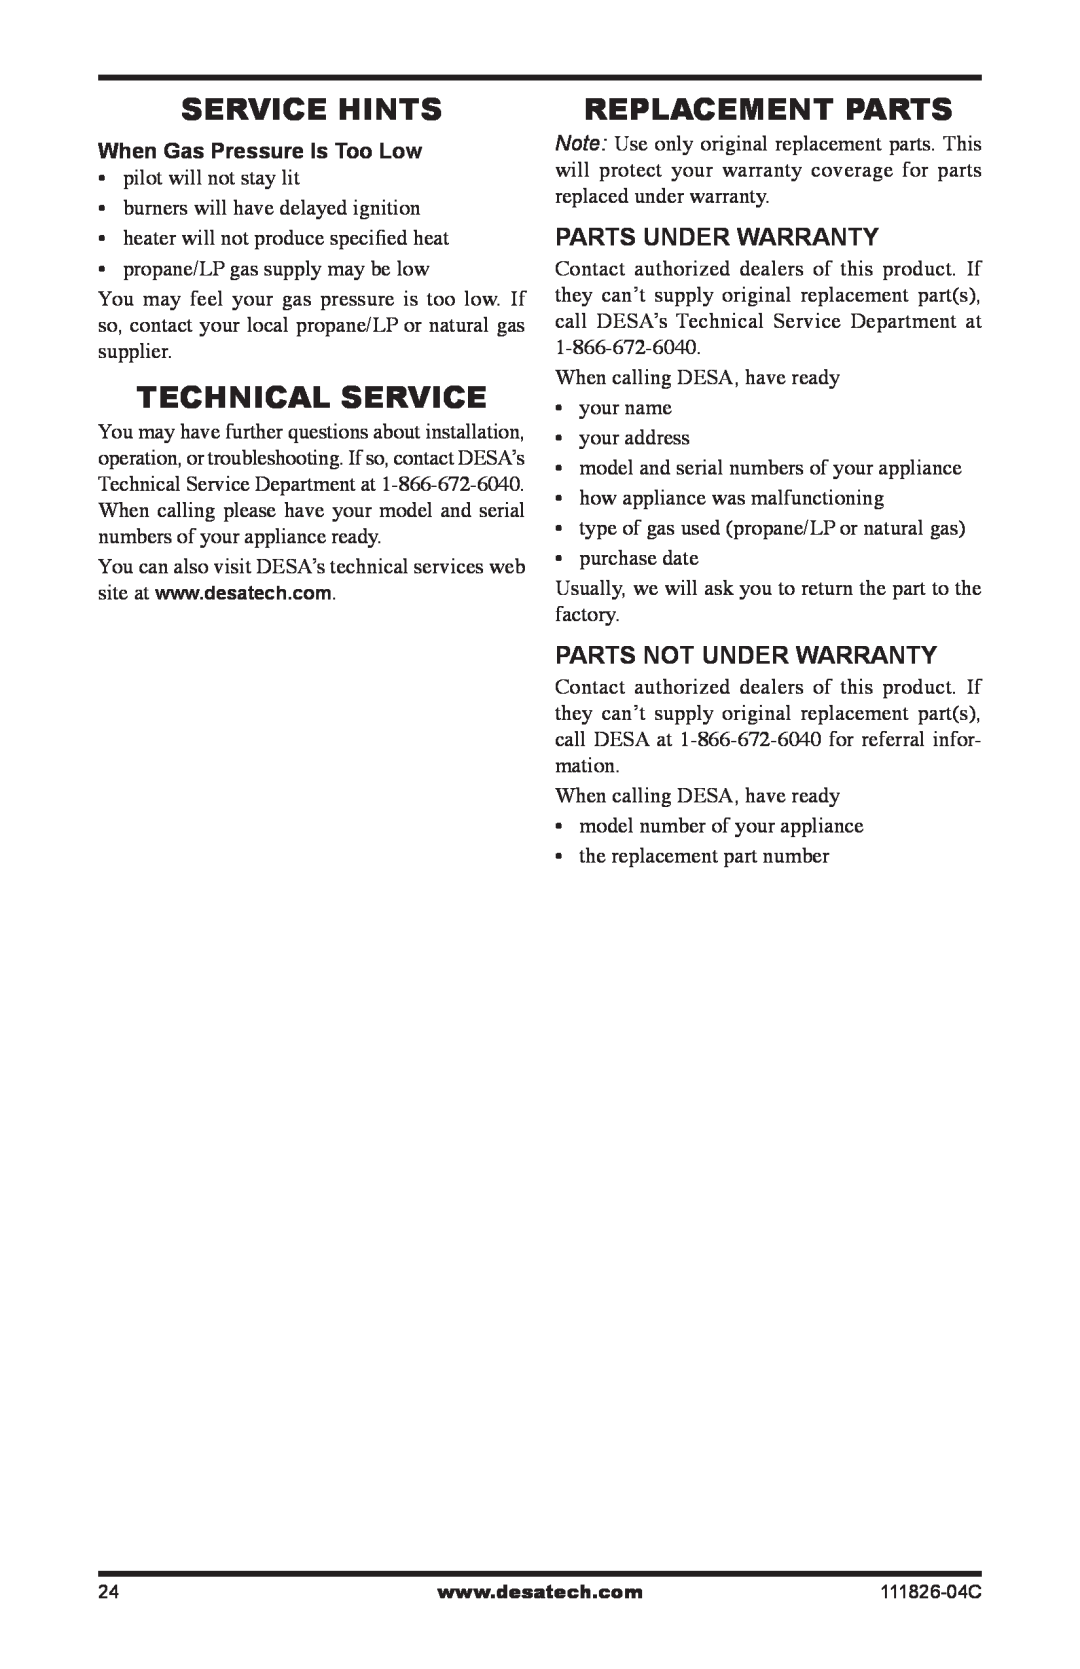 Desa VF-30N-PJD Service Hints, Technical Service, Replacement Parts, Parts Under Warranty, Parts Not Under Warranty 